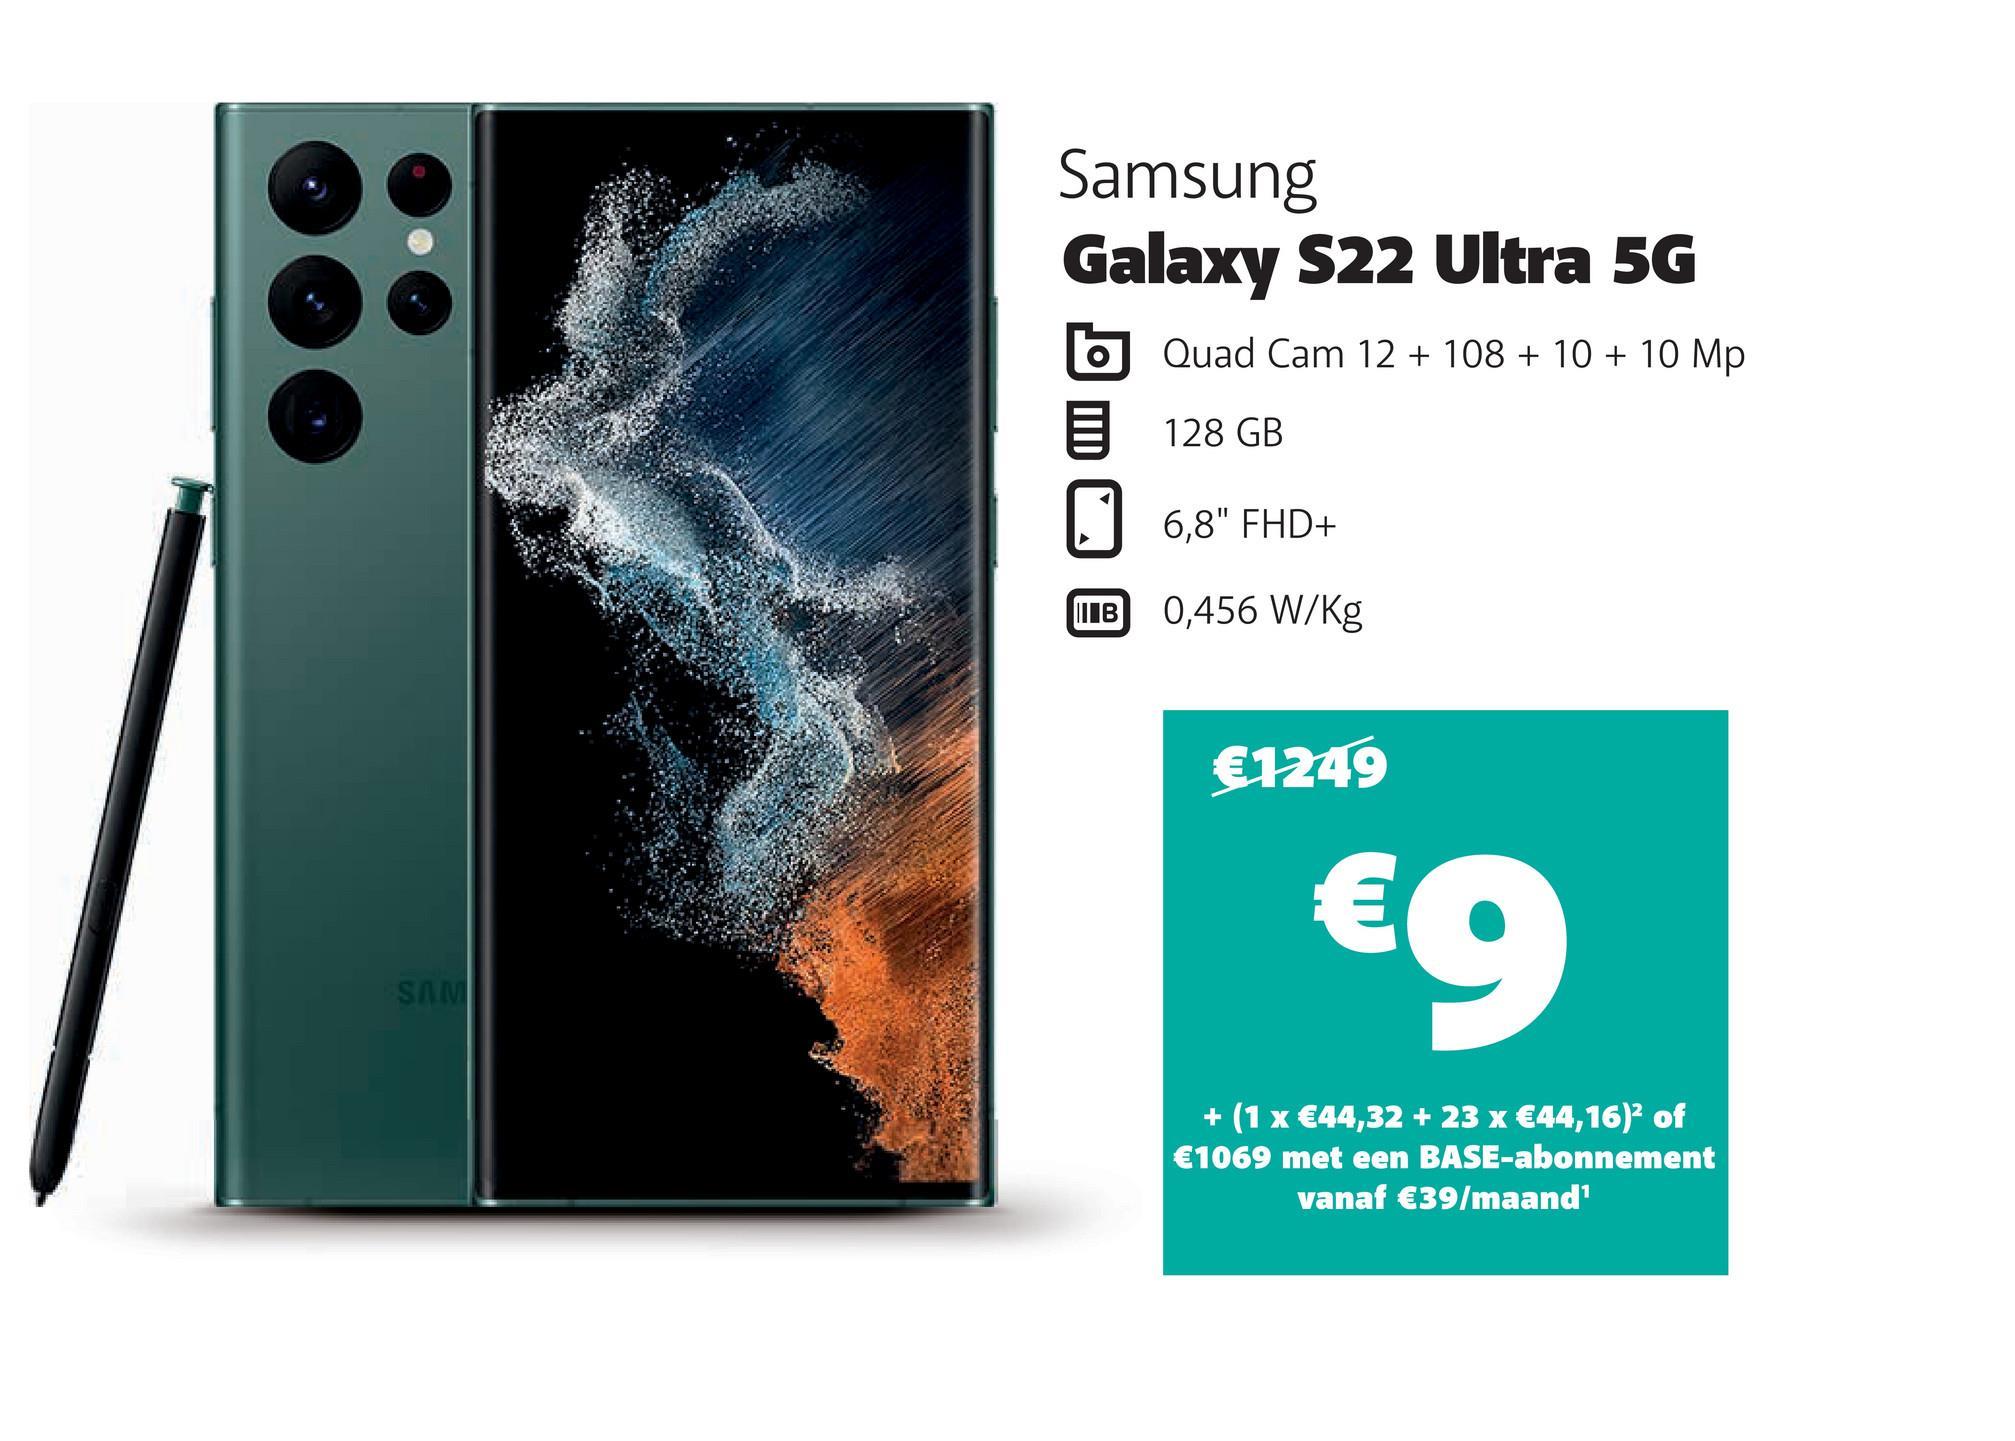 ::
Samsung
Galaxy S22 Ultra 5G
Quad Cam 12 + 108 + 10 + 10 Mp
5
128 GB
6,8" FHD+
ІШІВ
0,456 W/kg
€1249
€9
SAM
+ (1 x €44,32 + 23 x €44,16)2 of
€1069 met een BASE-abonnement
vanaf €39/maand1
